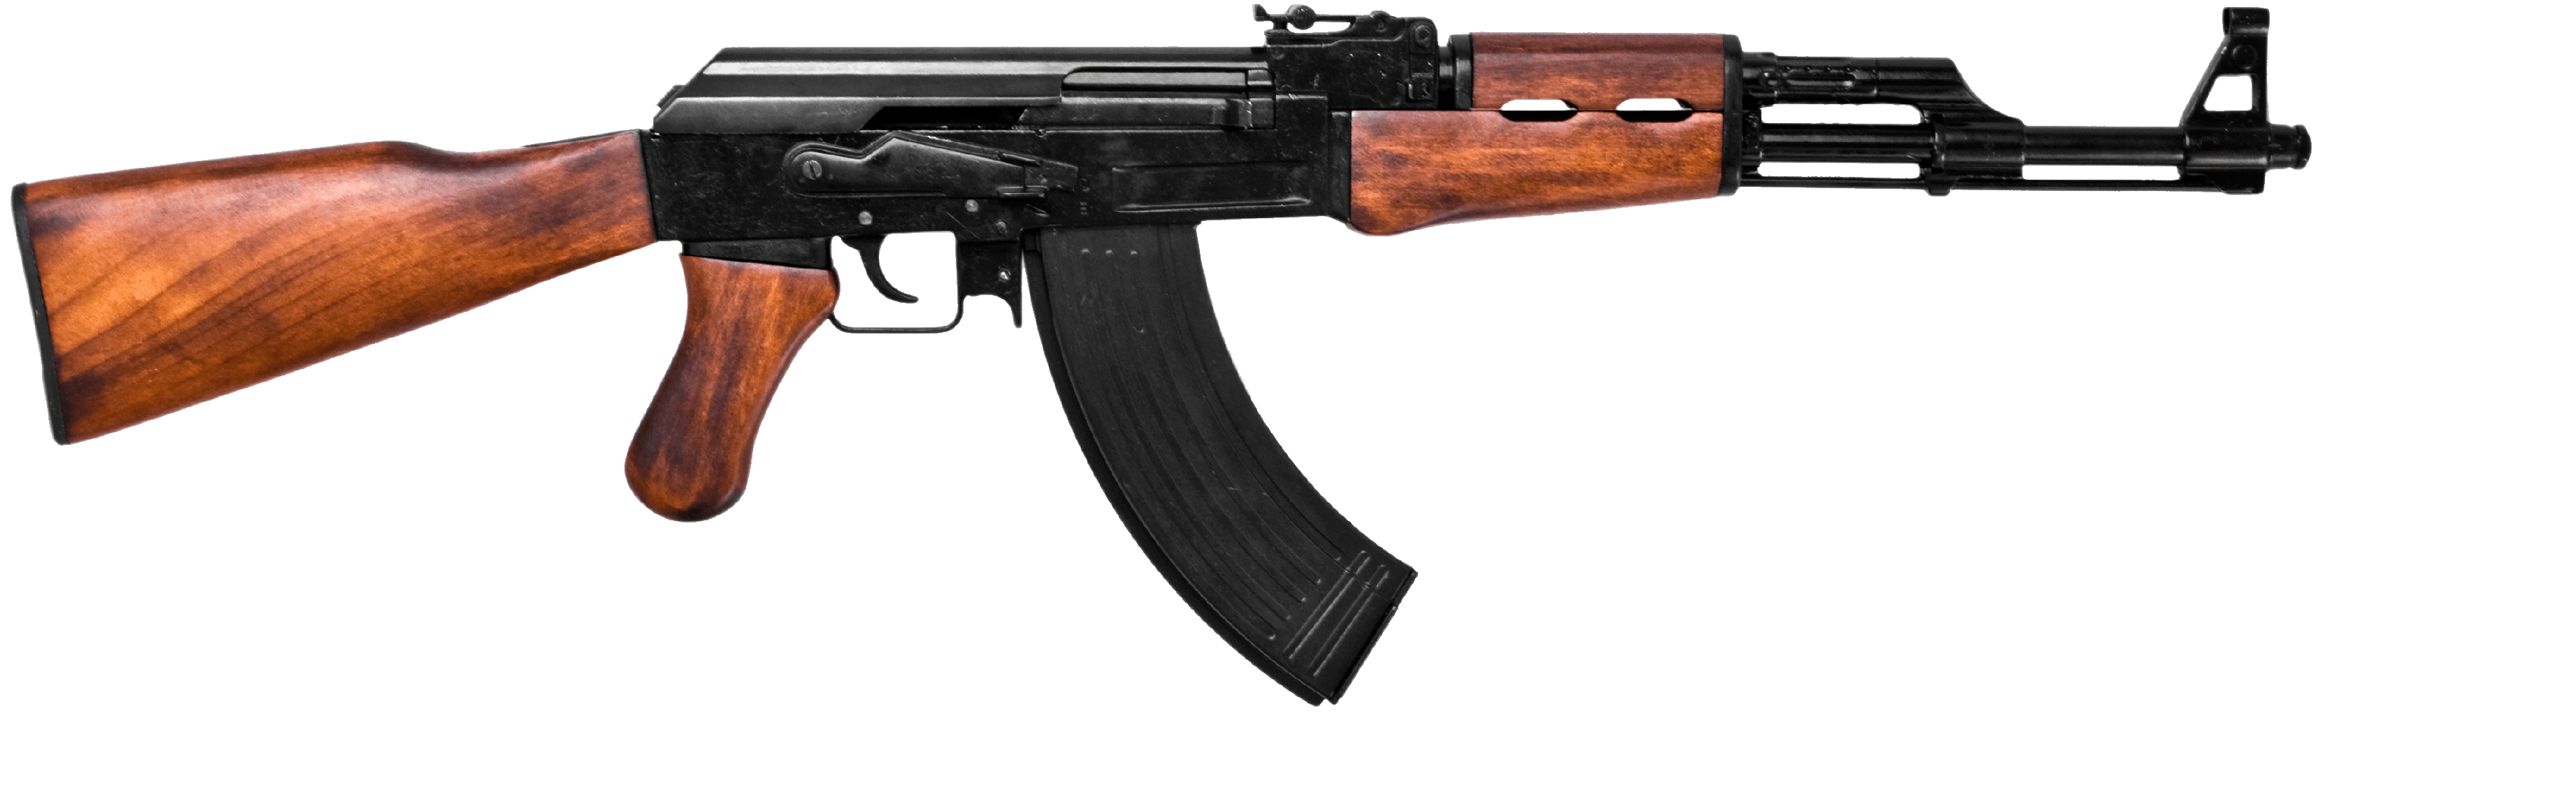 Ak 47 Kalash Russian Assault Rifle Png Png Image - Assault Rifle, Transparent background PNG HD thumbnail